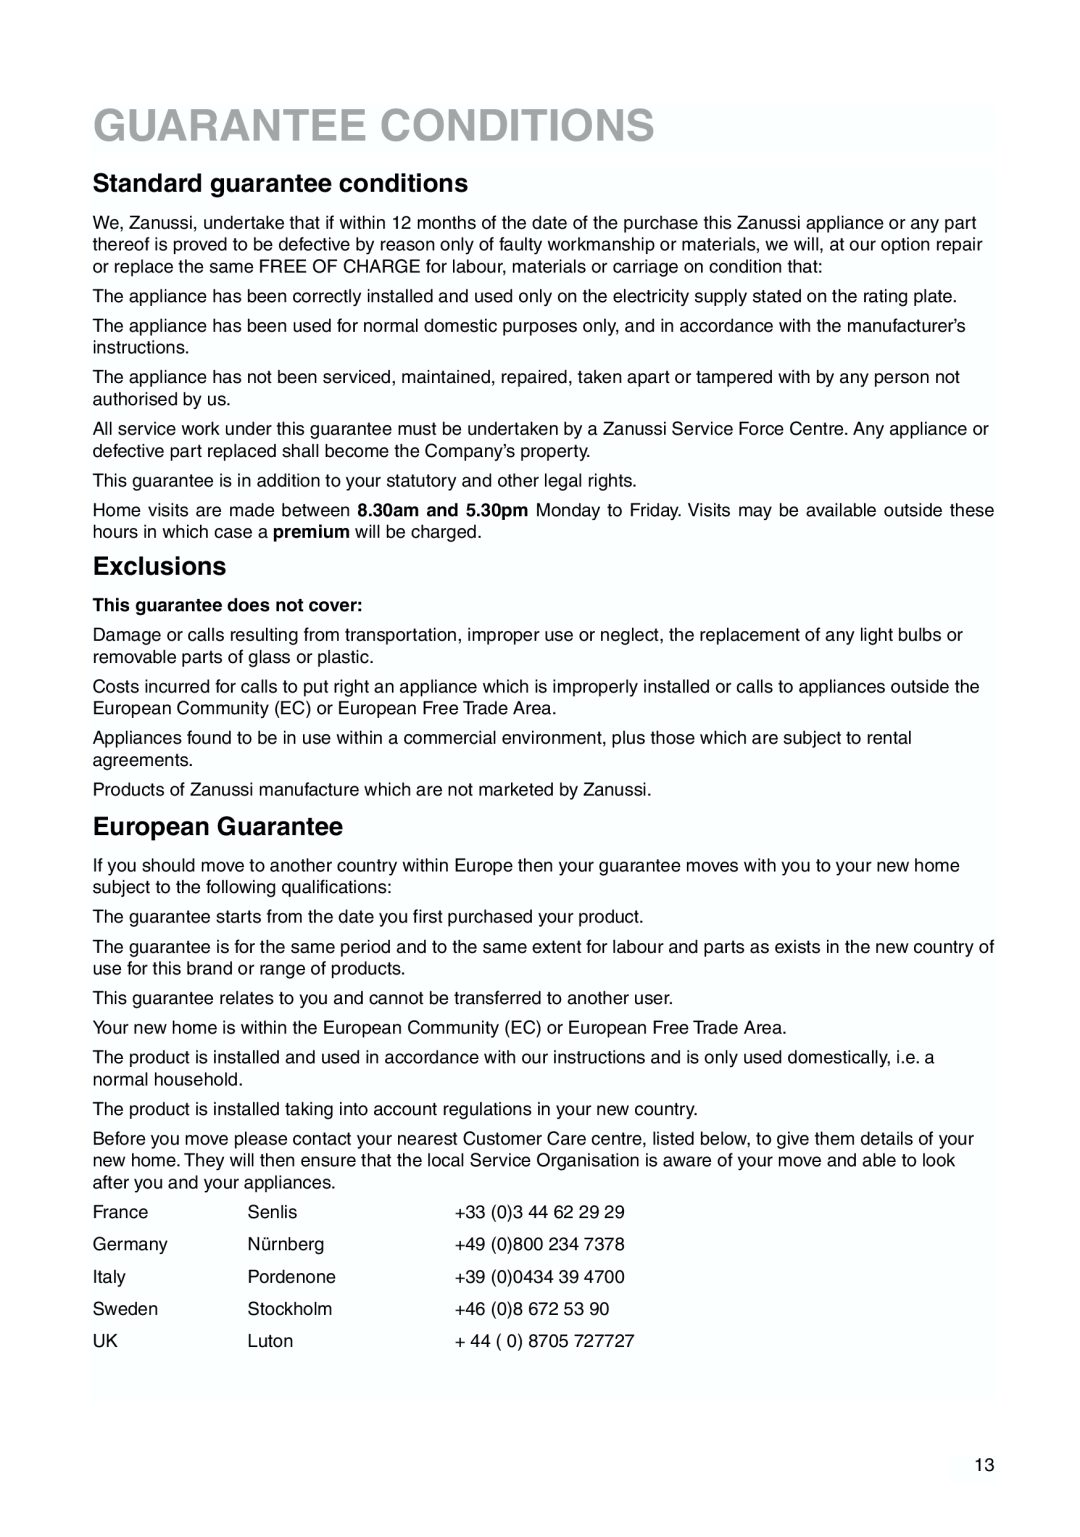 Zanussi ZI 918/9 FFA manual Guarantee Conditions, Standard guarantee conditions, Exclusions, European Guarantee 